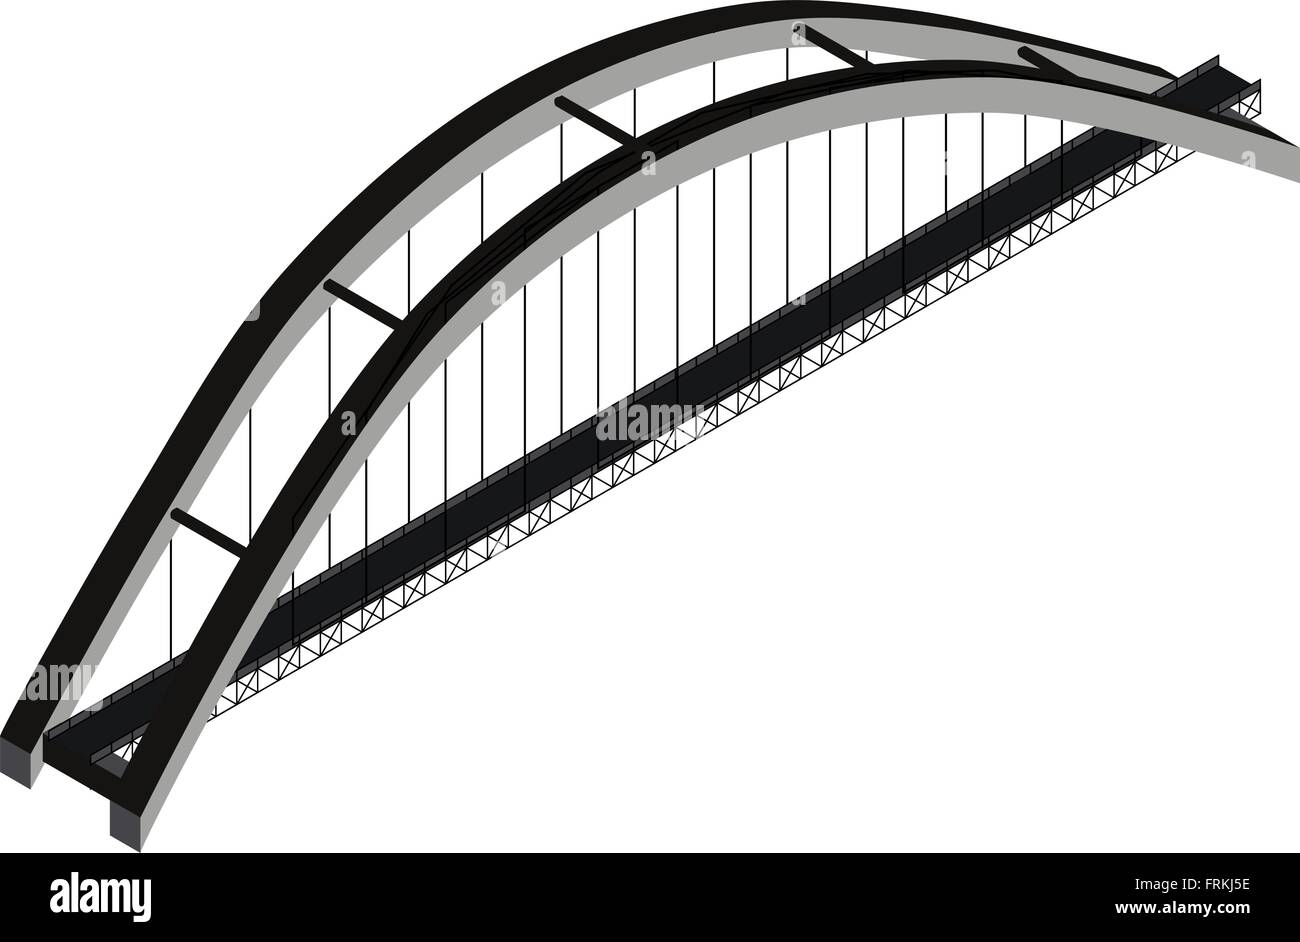 9 Iron arch bridge drawings, Truss bridge drawings Images: PICRYL - Public  Domain Media Search Engine Public Domain Search